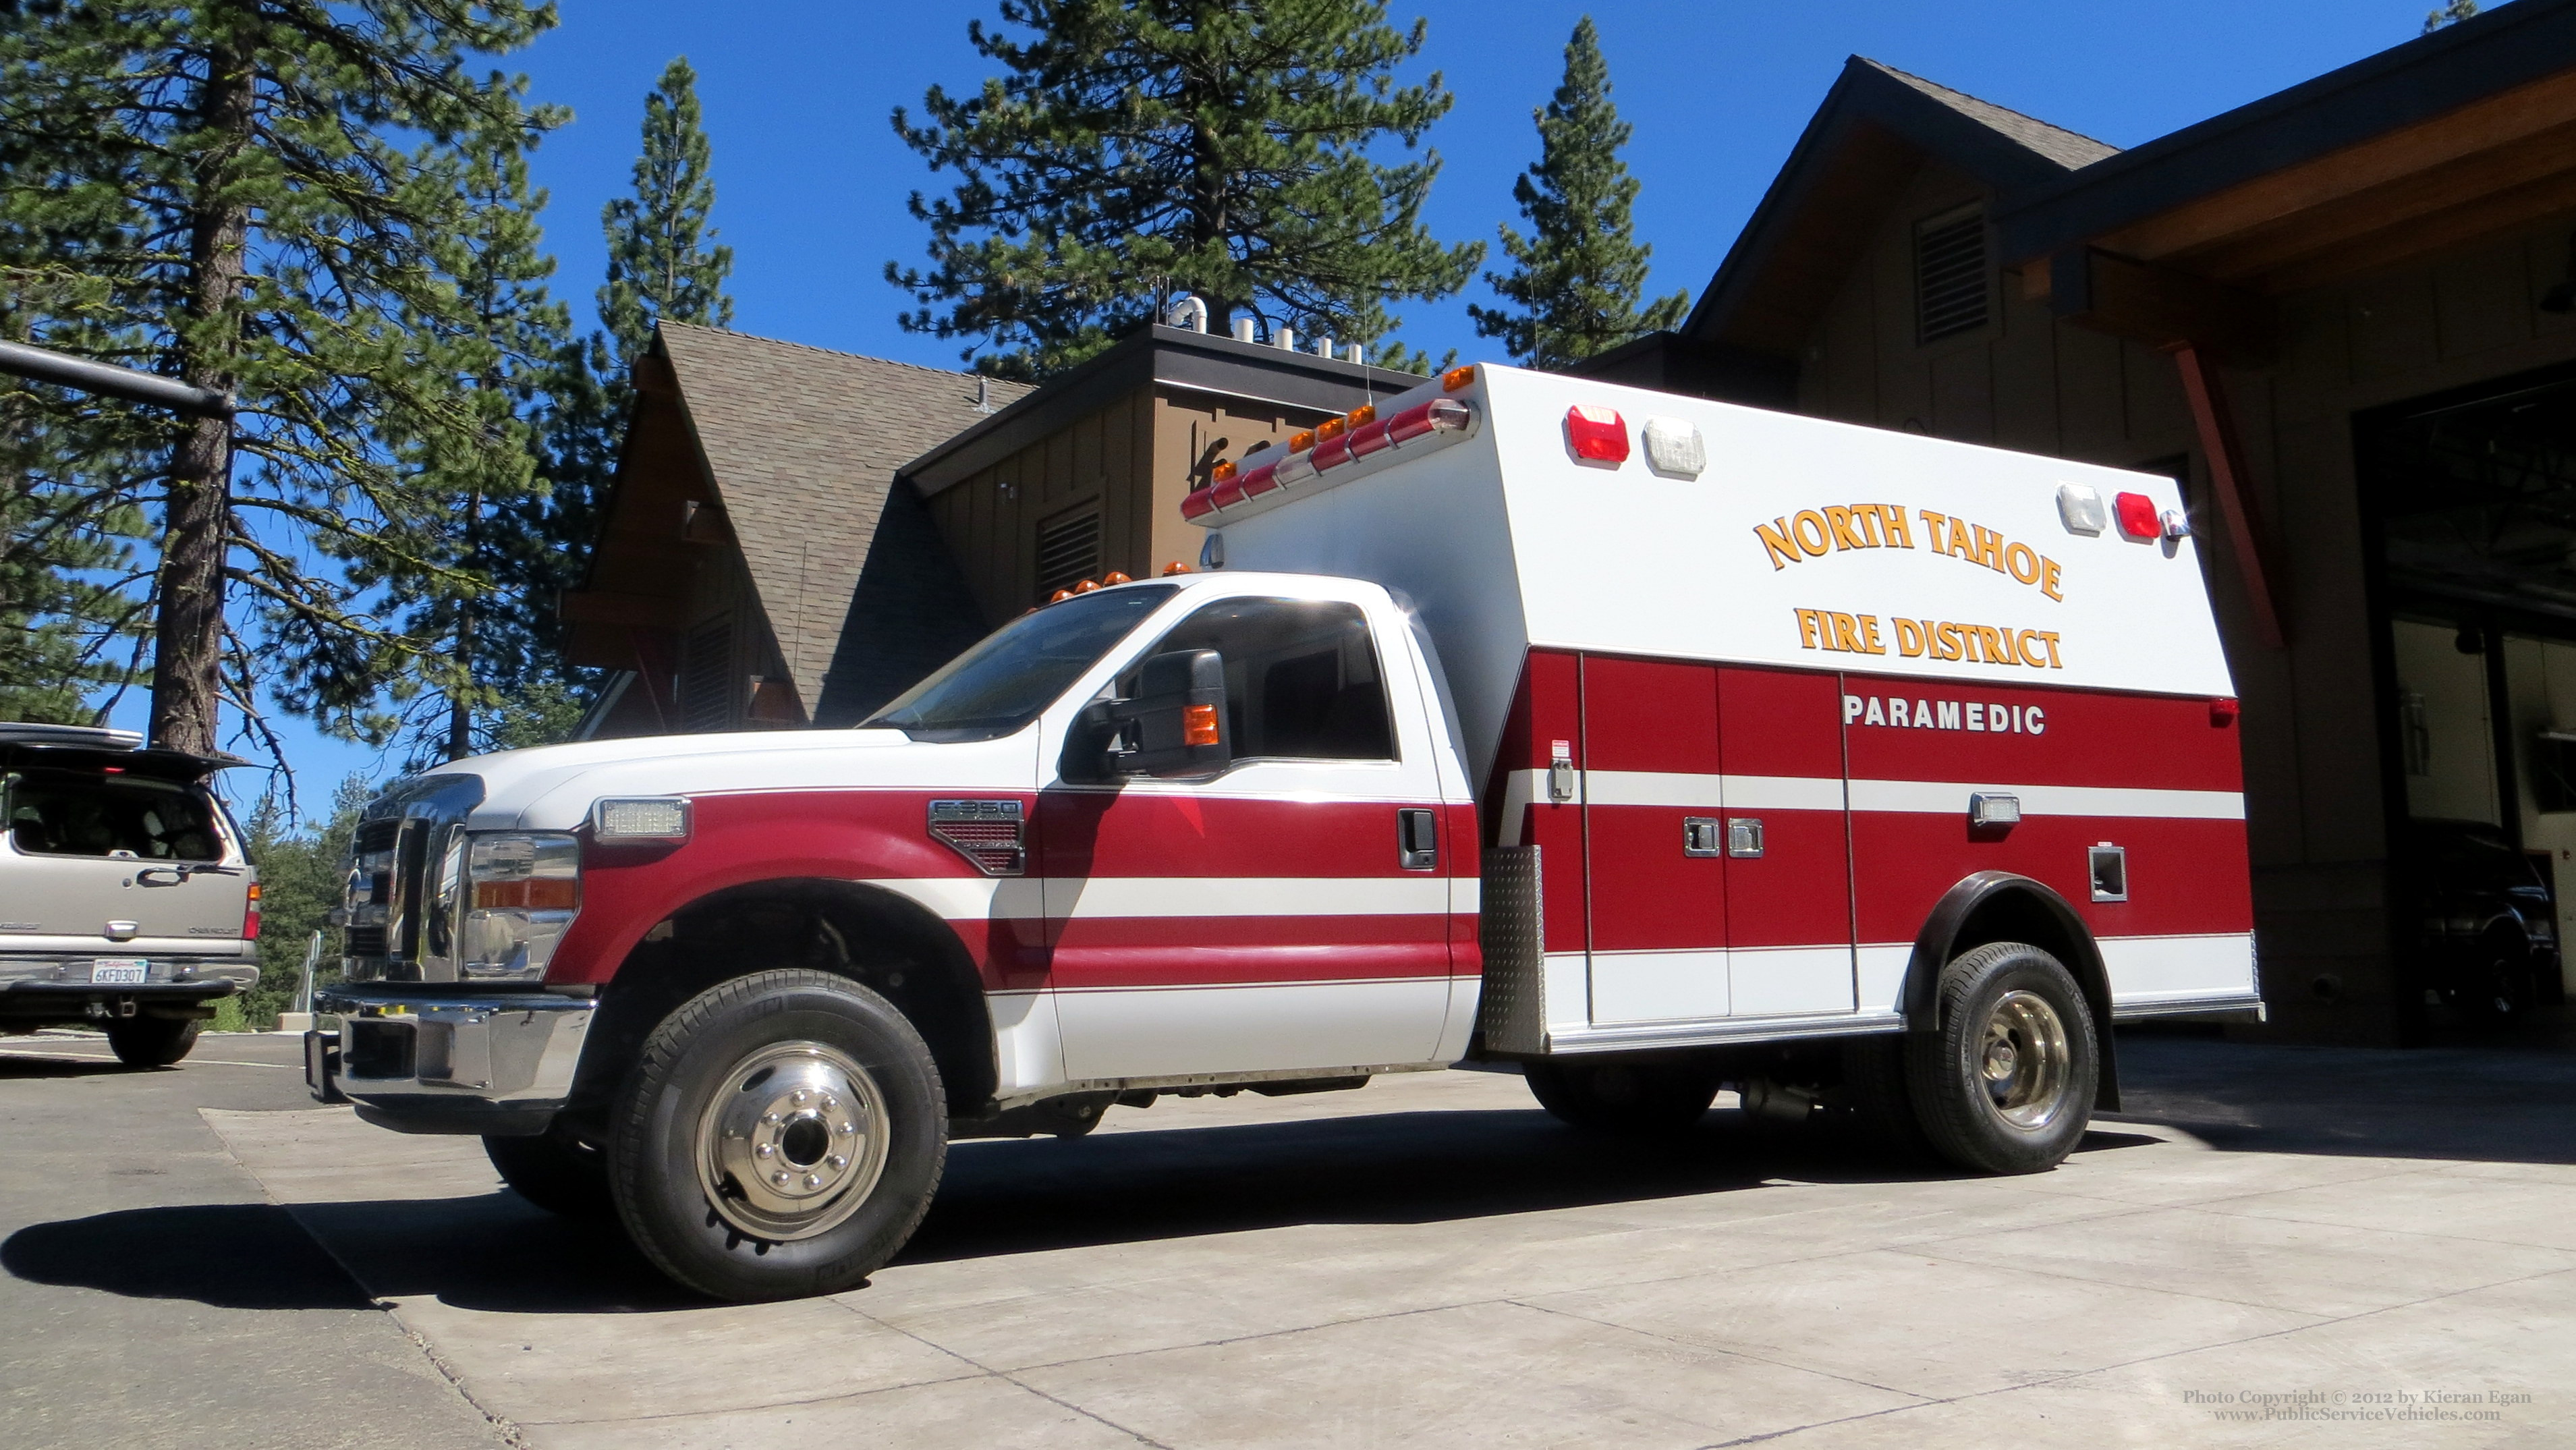 A photo  of North Tahoe Fire District
            Ambulance 251, a 2007 Ford F-350             taken by Kieran Egan